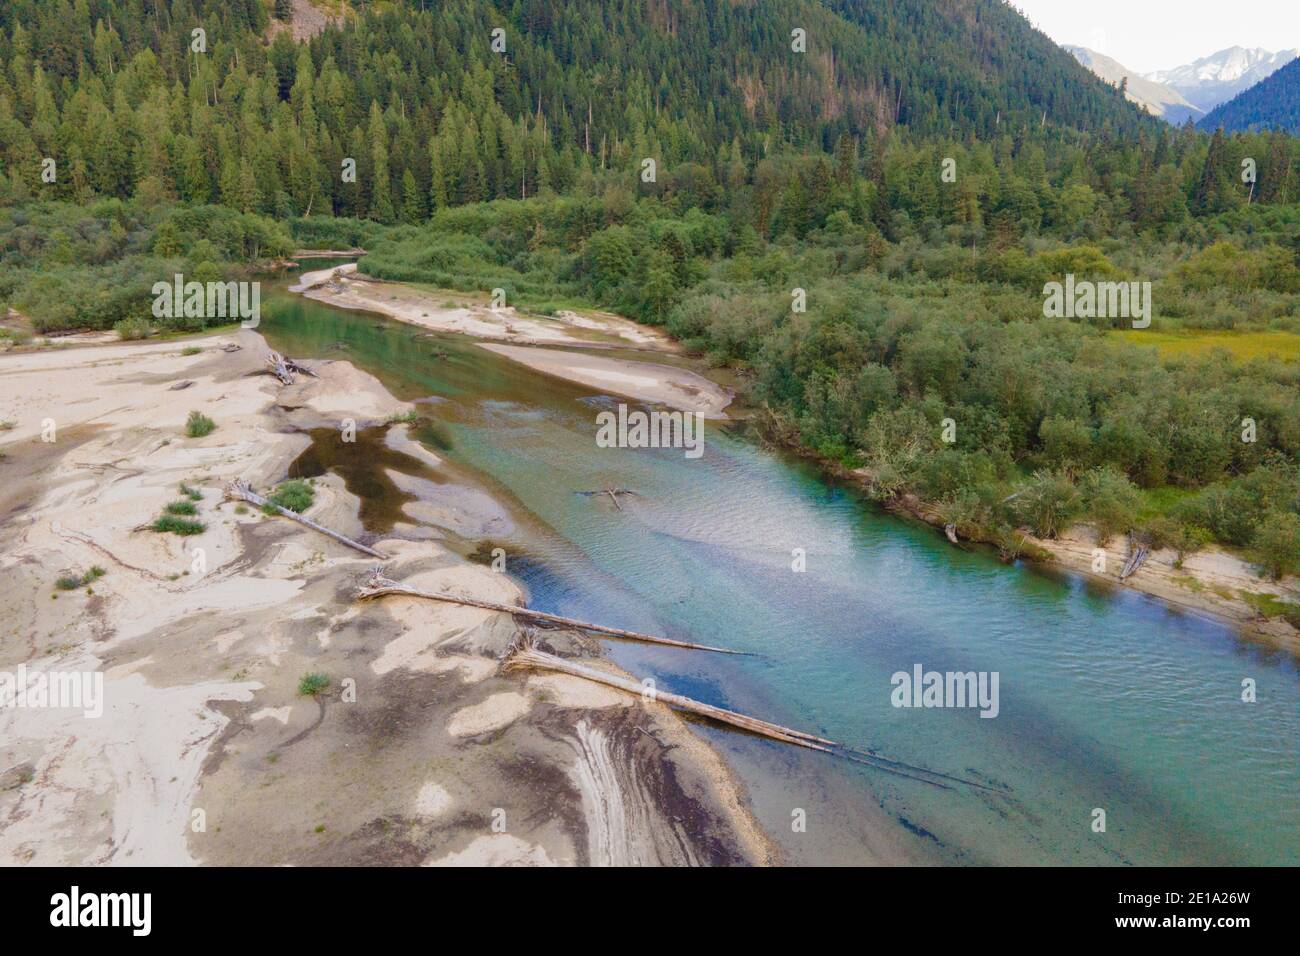 Alpine stream typical spawning location for wild Sockeye Salmon Stock Photo